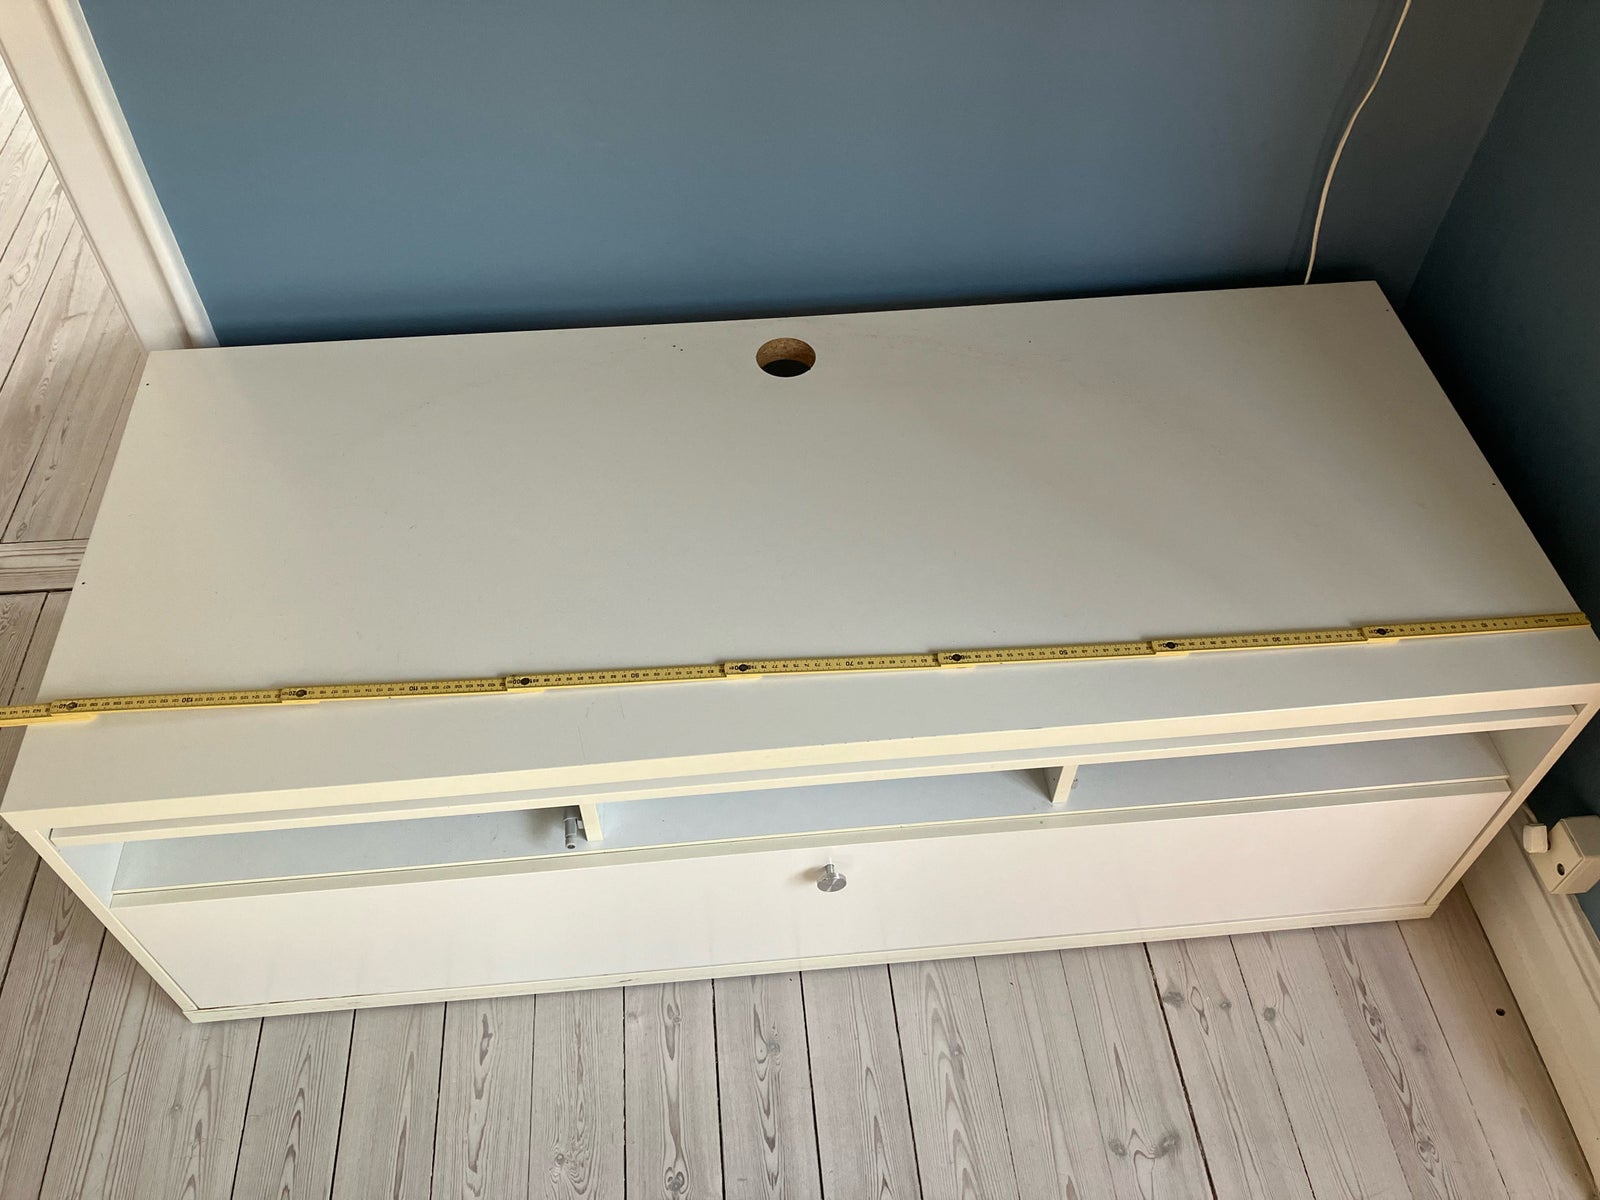 TV Bord gives væk. 

Ikea - ca 15 år 

Lidt gul...